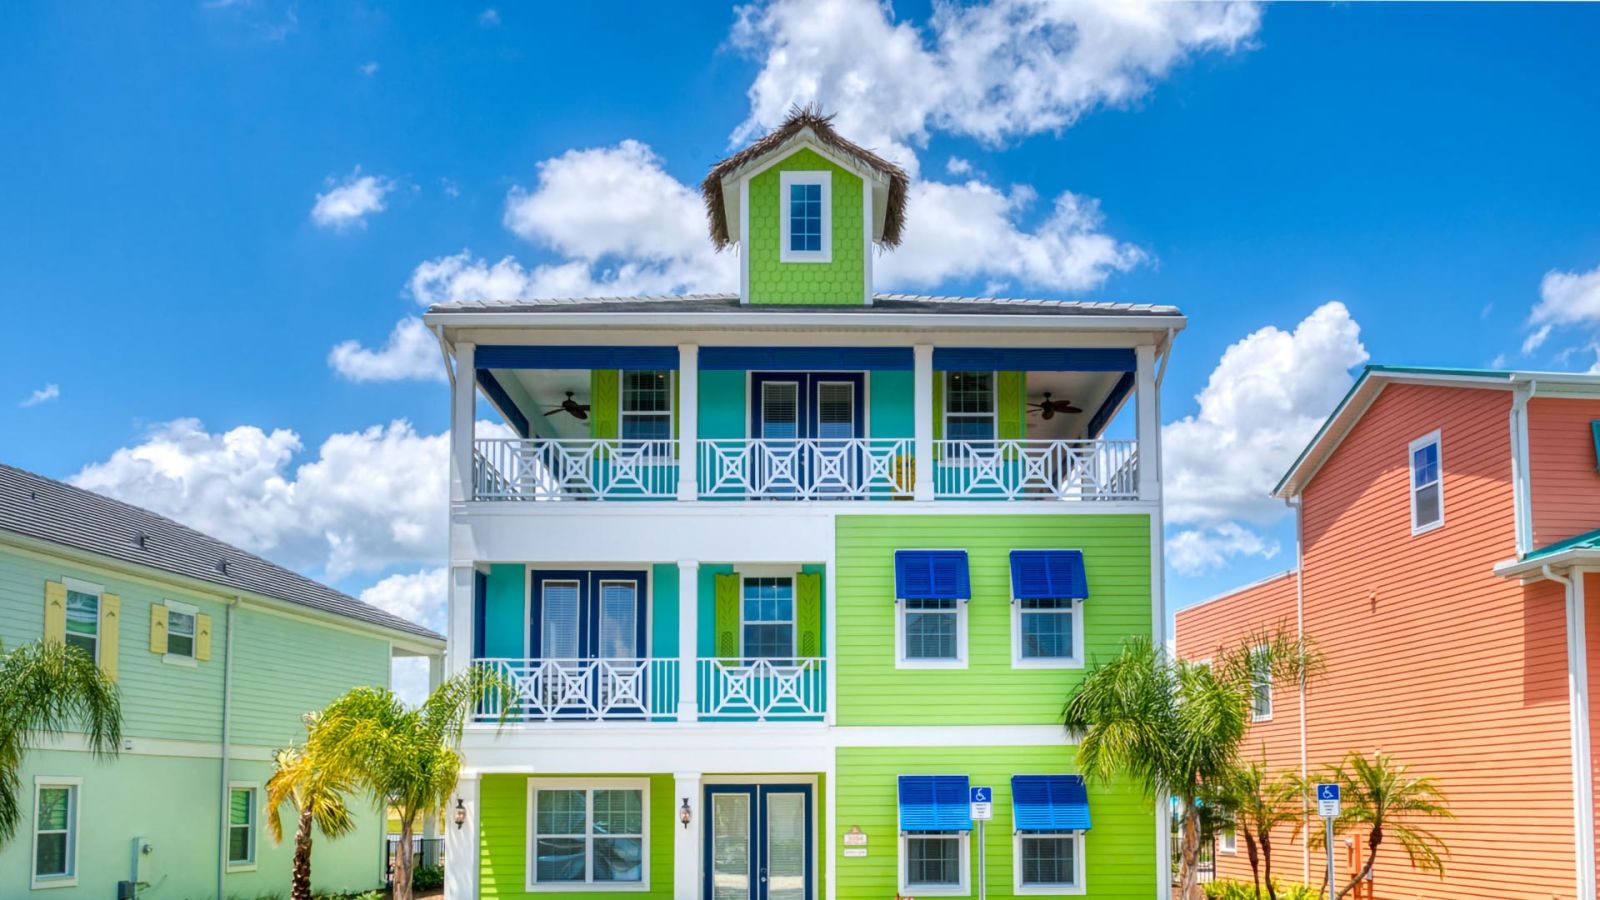 8-bedroom cottage with 3 floors at Margaritaville Resort Orlando.